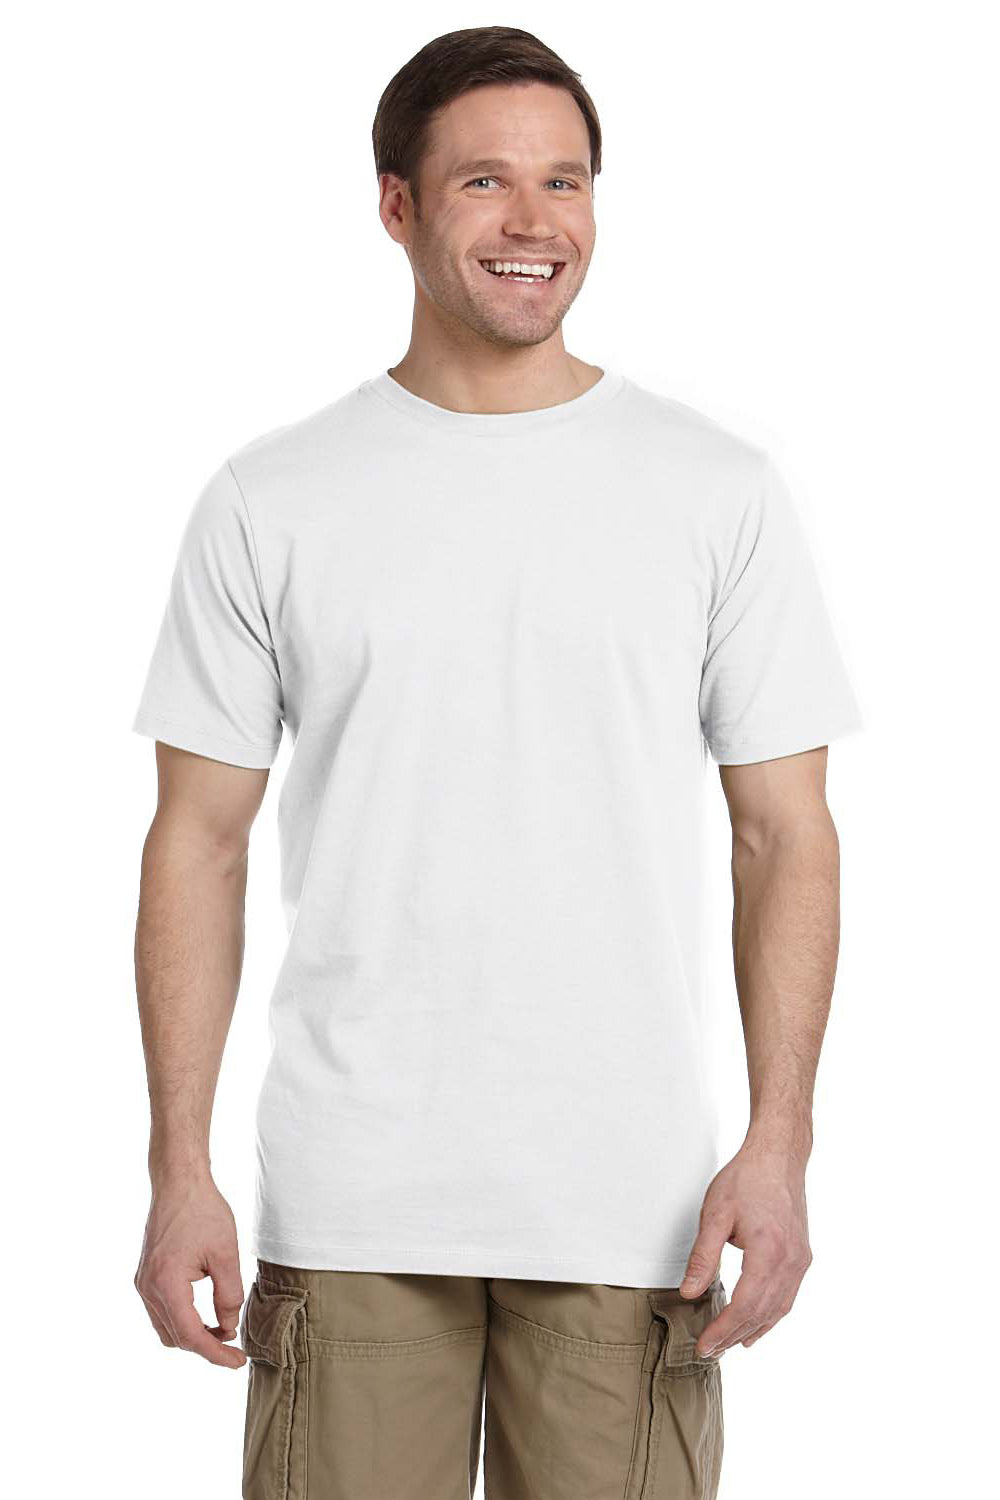 Econscious EC1075 Mens Short Sleeve Crewneck T-Shirt White Front